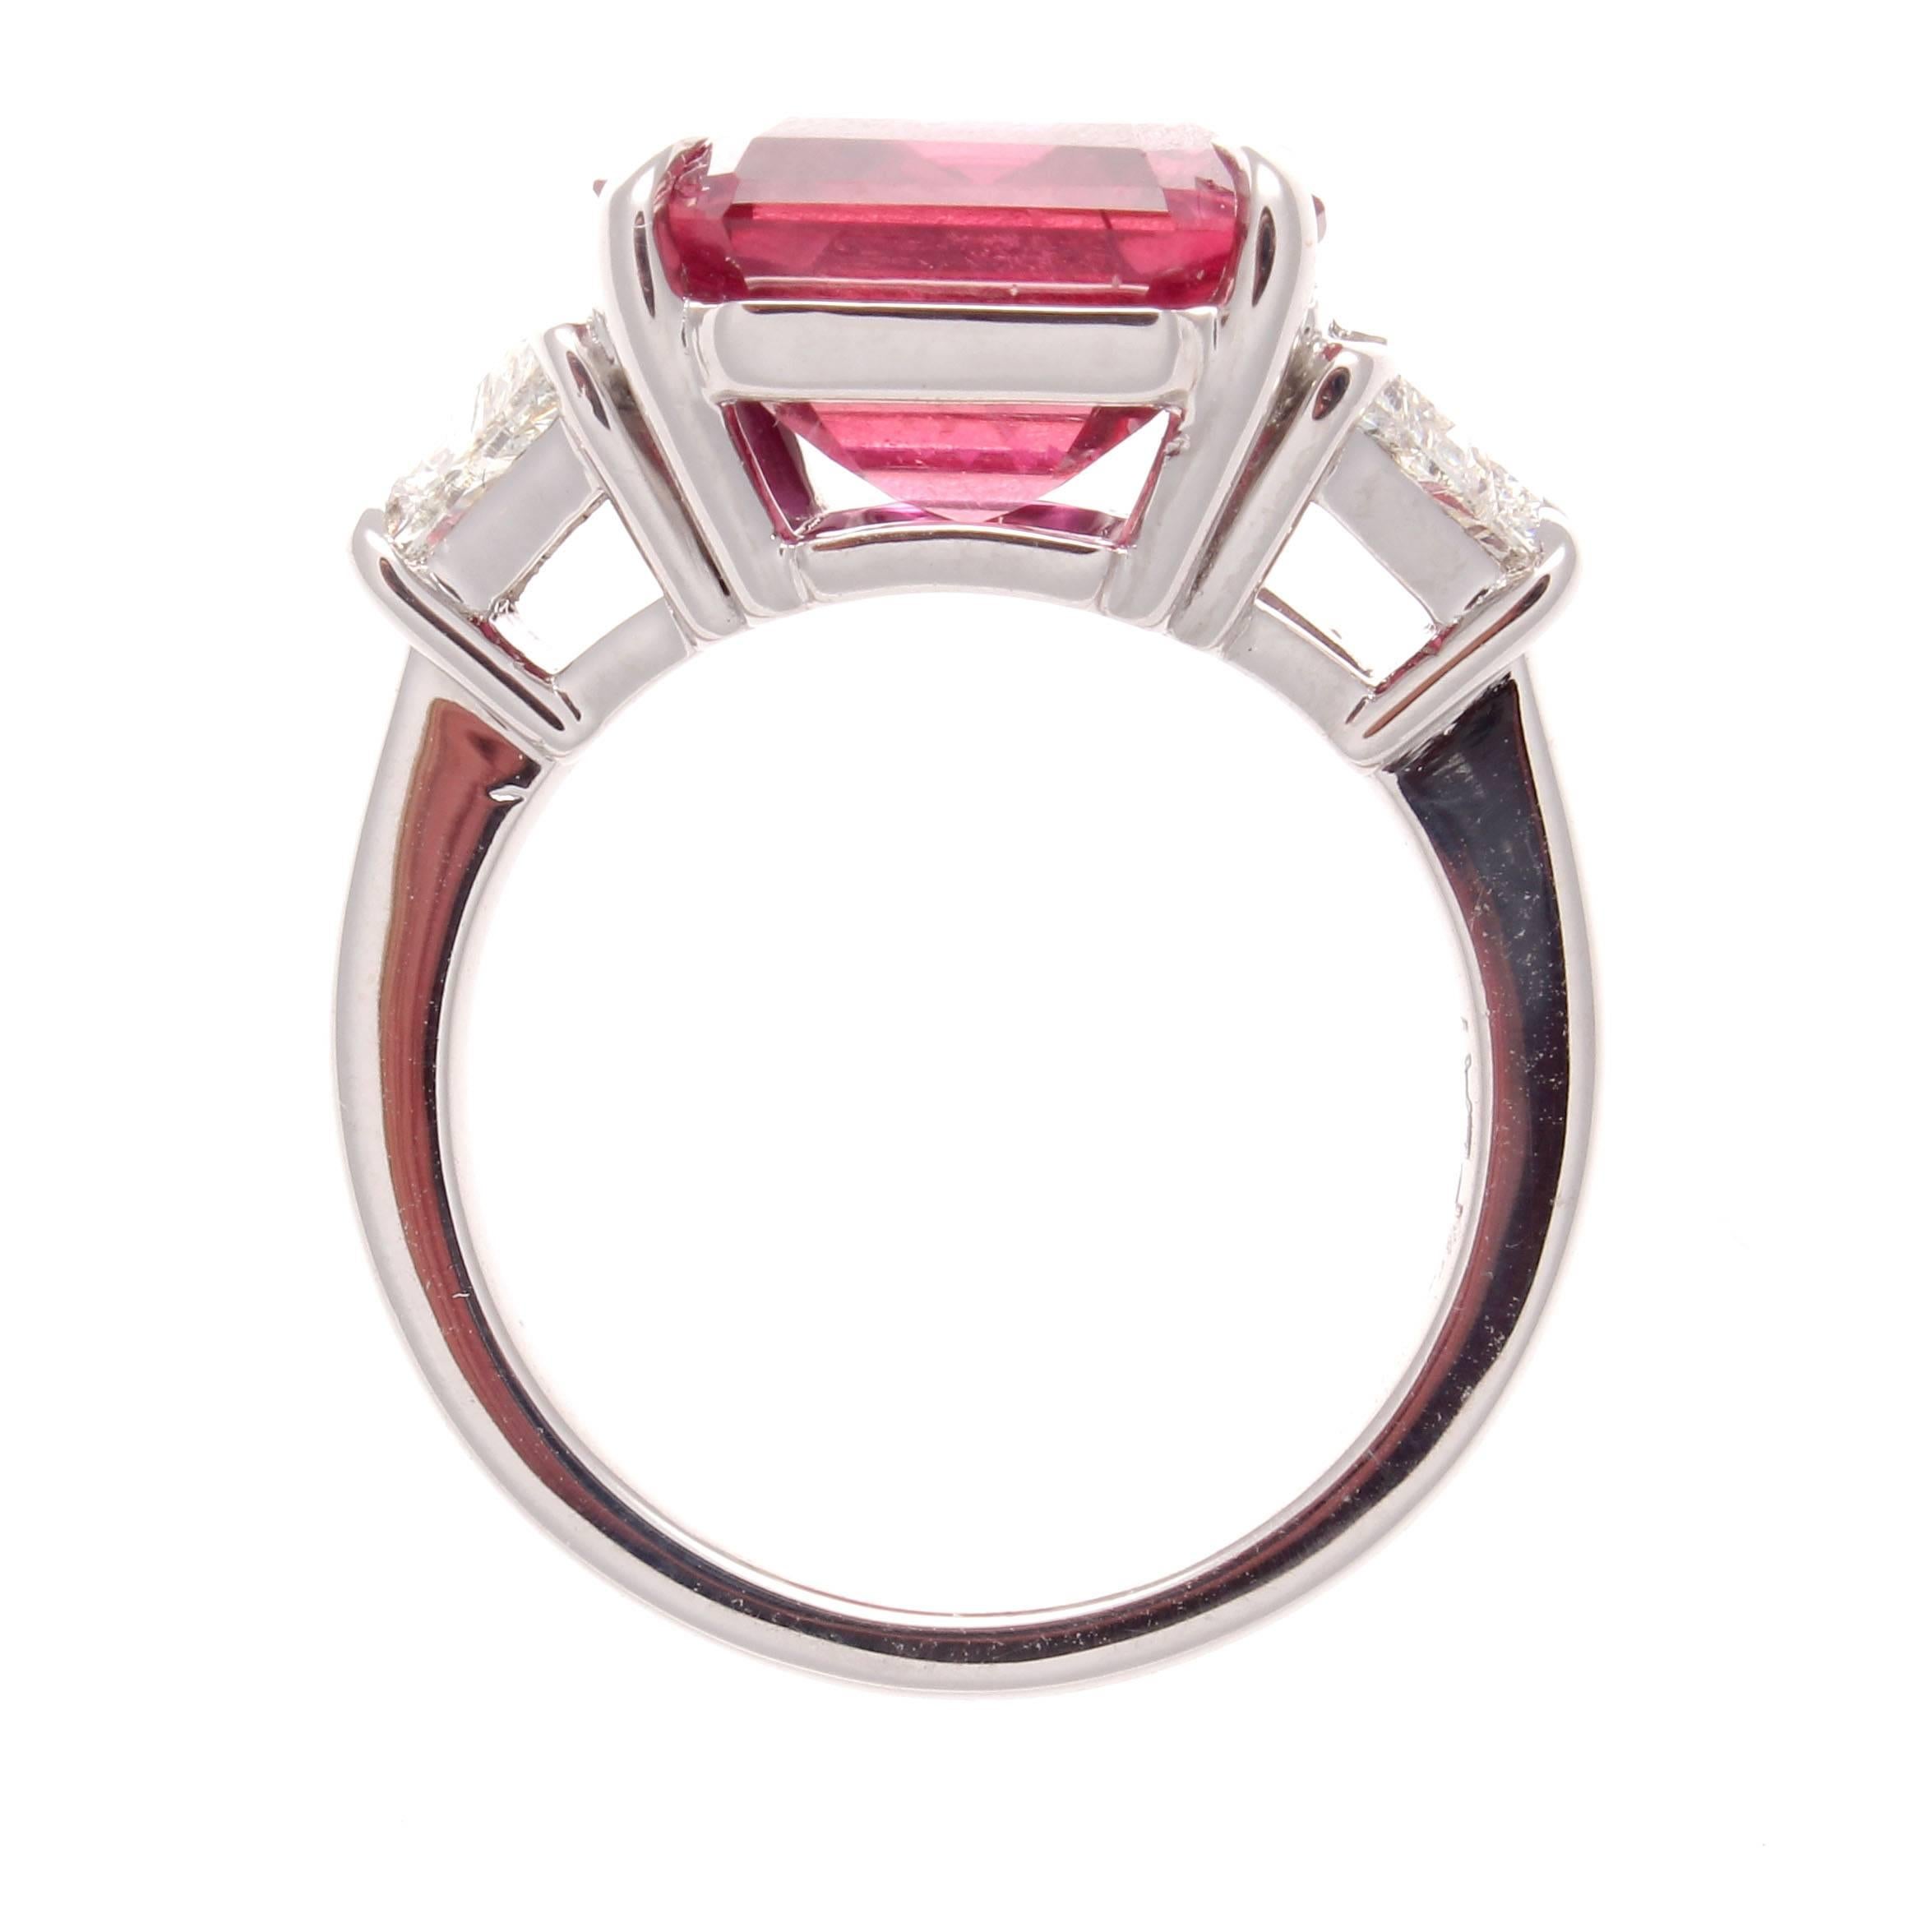 Cushion Cut SSEF Certified 10.02 Carat Ruby Diamond Platinum Ring